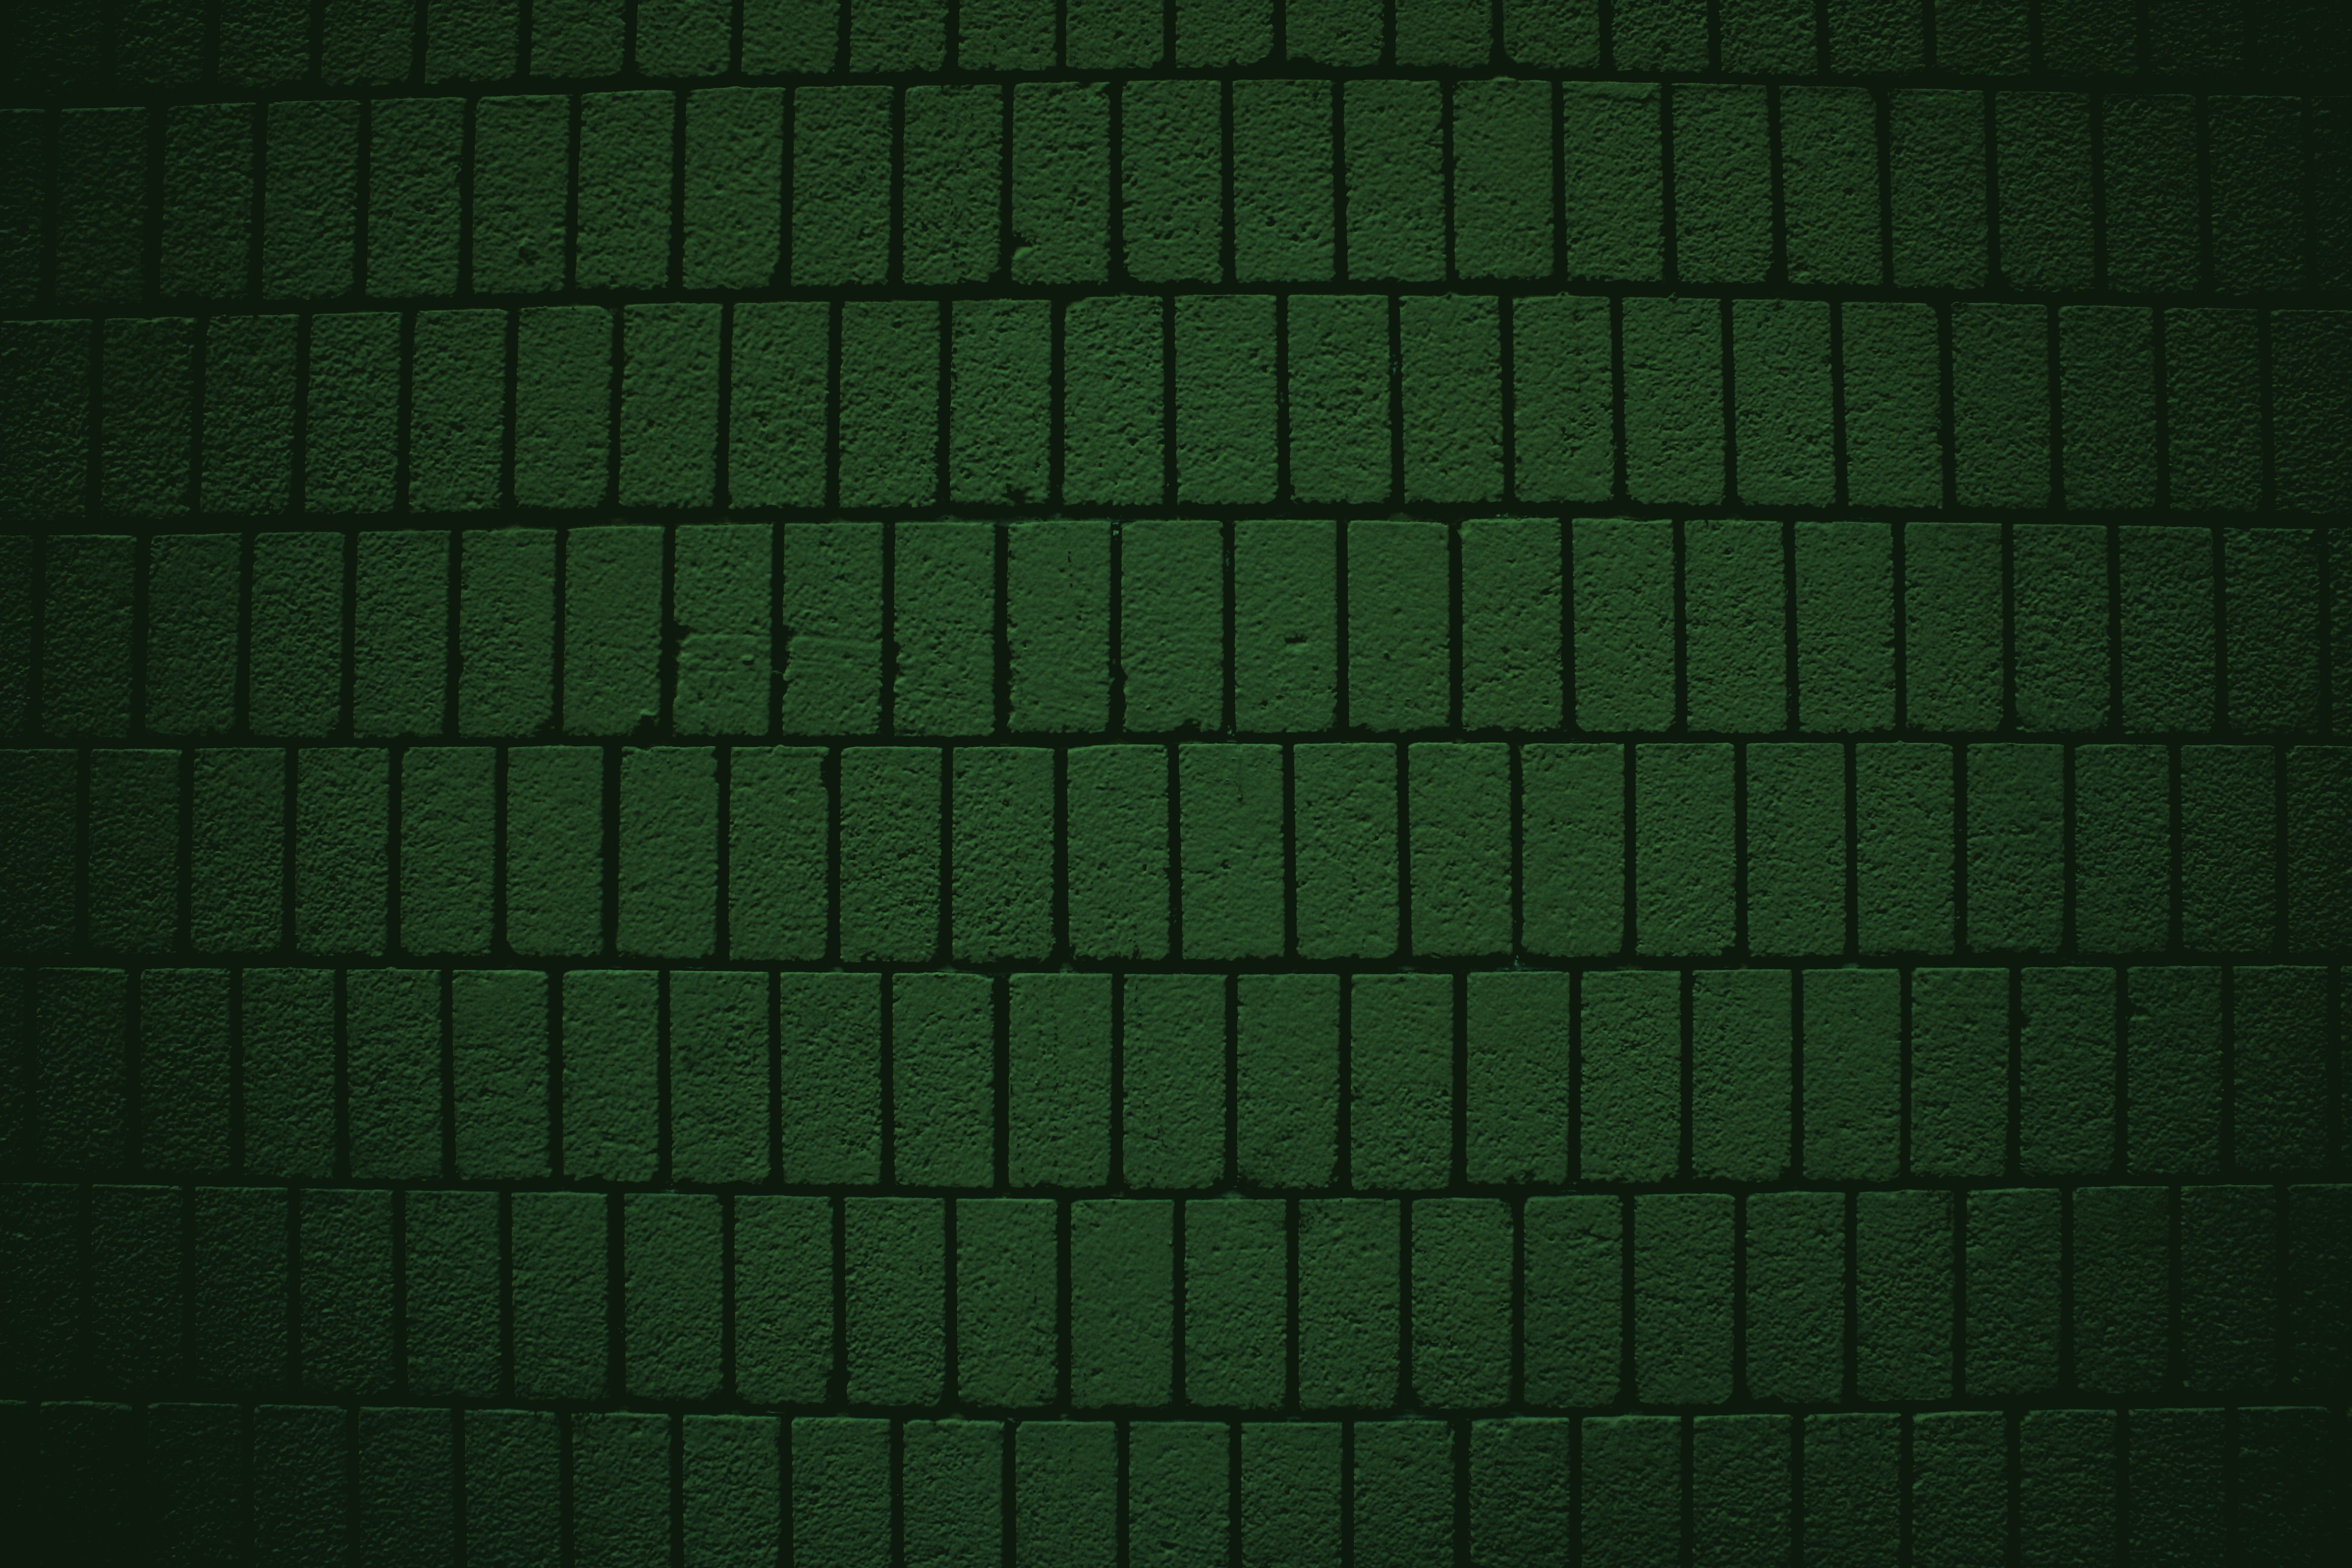 dark-green-brick-wall-texture-with-vertical-bricks.jpg